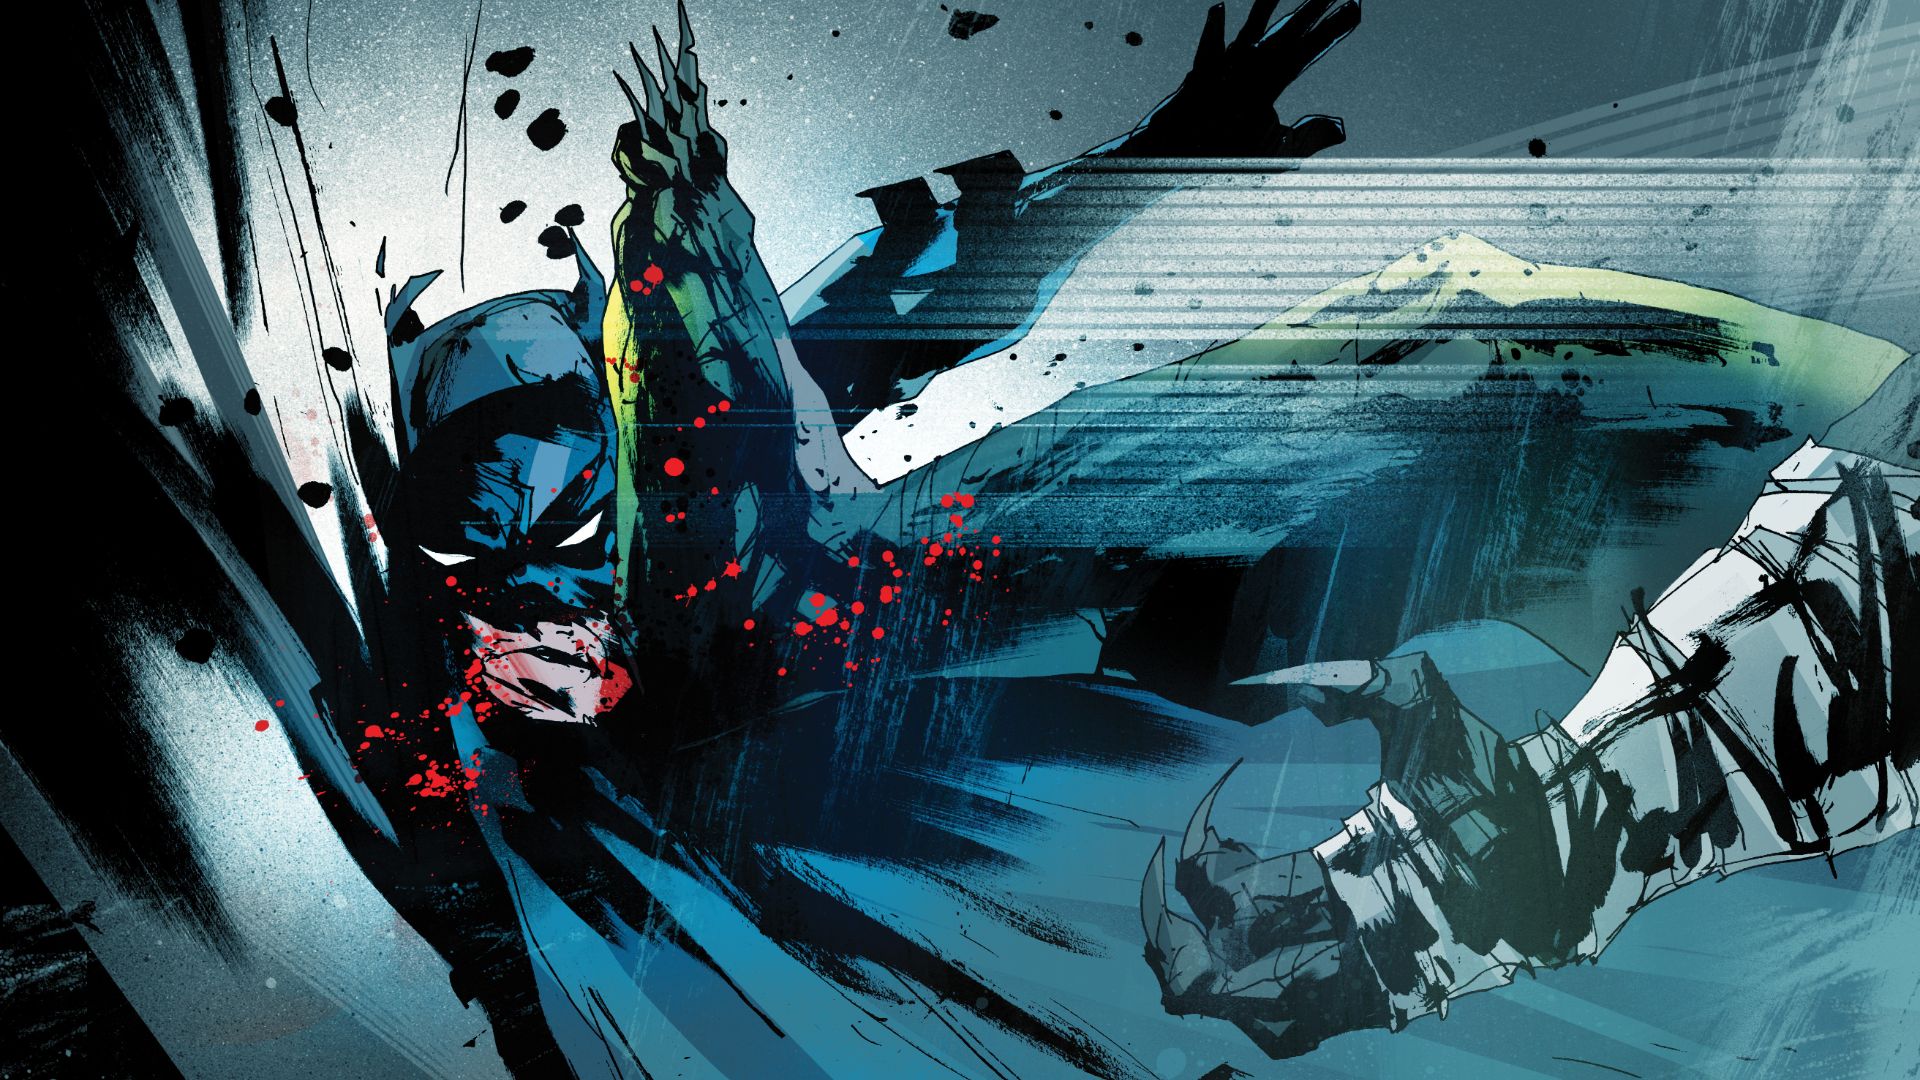 REVIEW: ROGUES #1, 'the Dark Knight Returns of villain comics